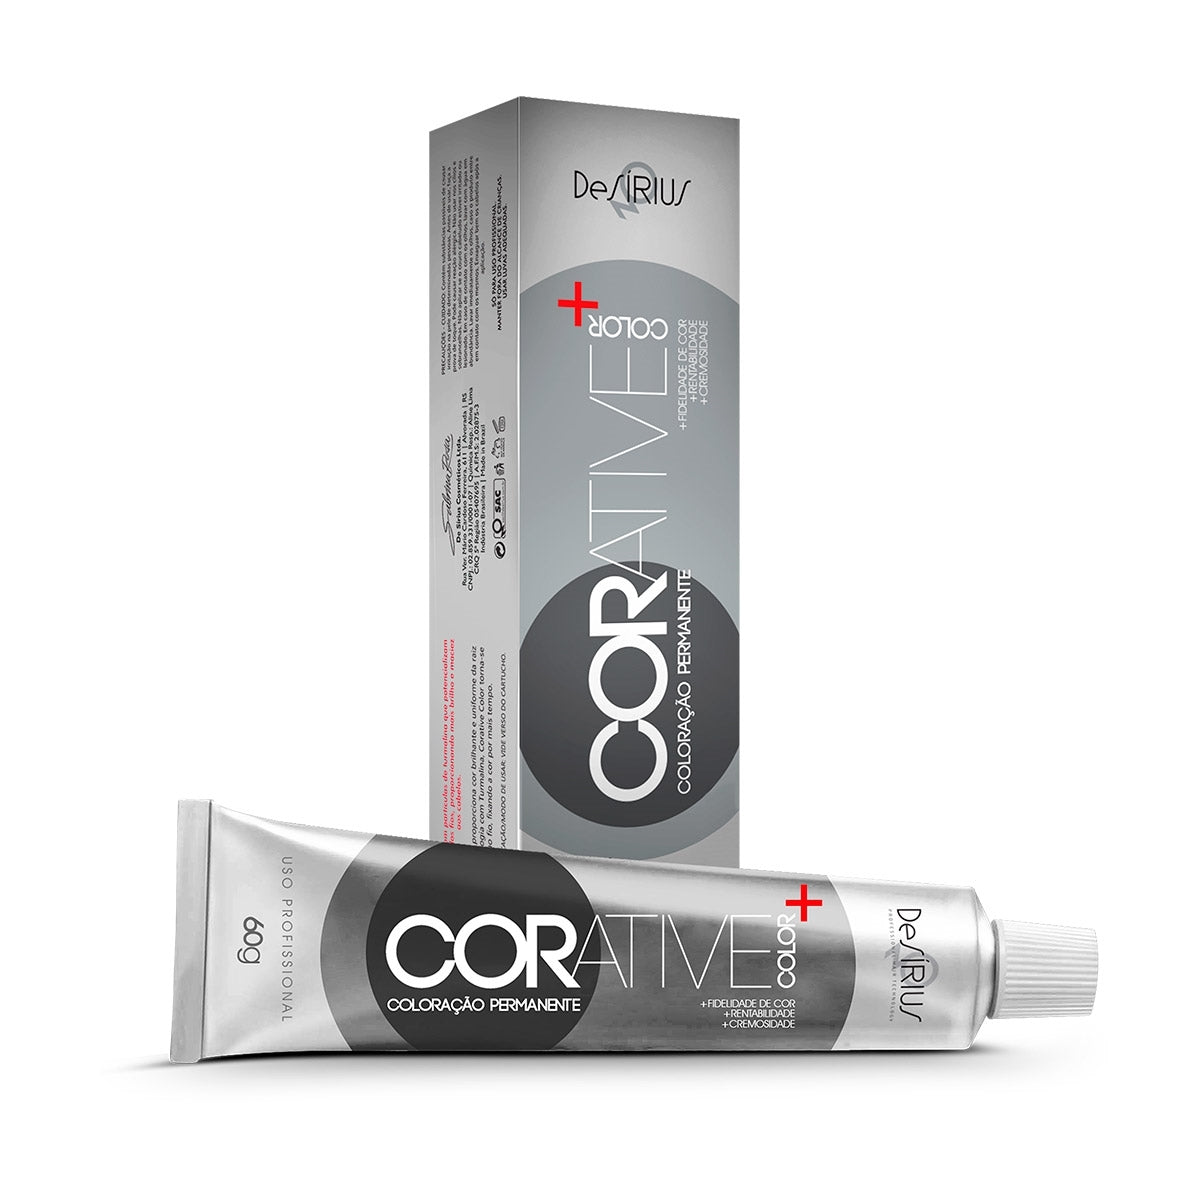 CORATIVE COLORATION - 5.20 LIGHT BROWN INTENSE IRISED - 60G FS Cosmetics